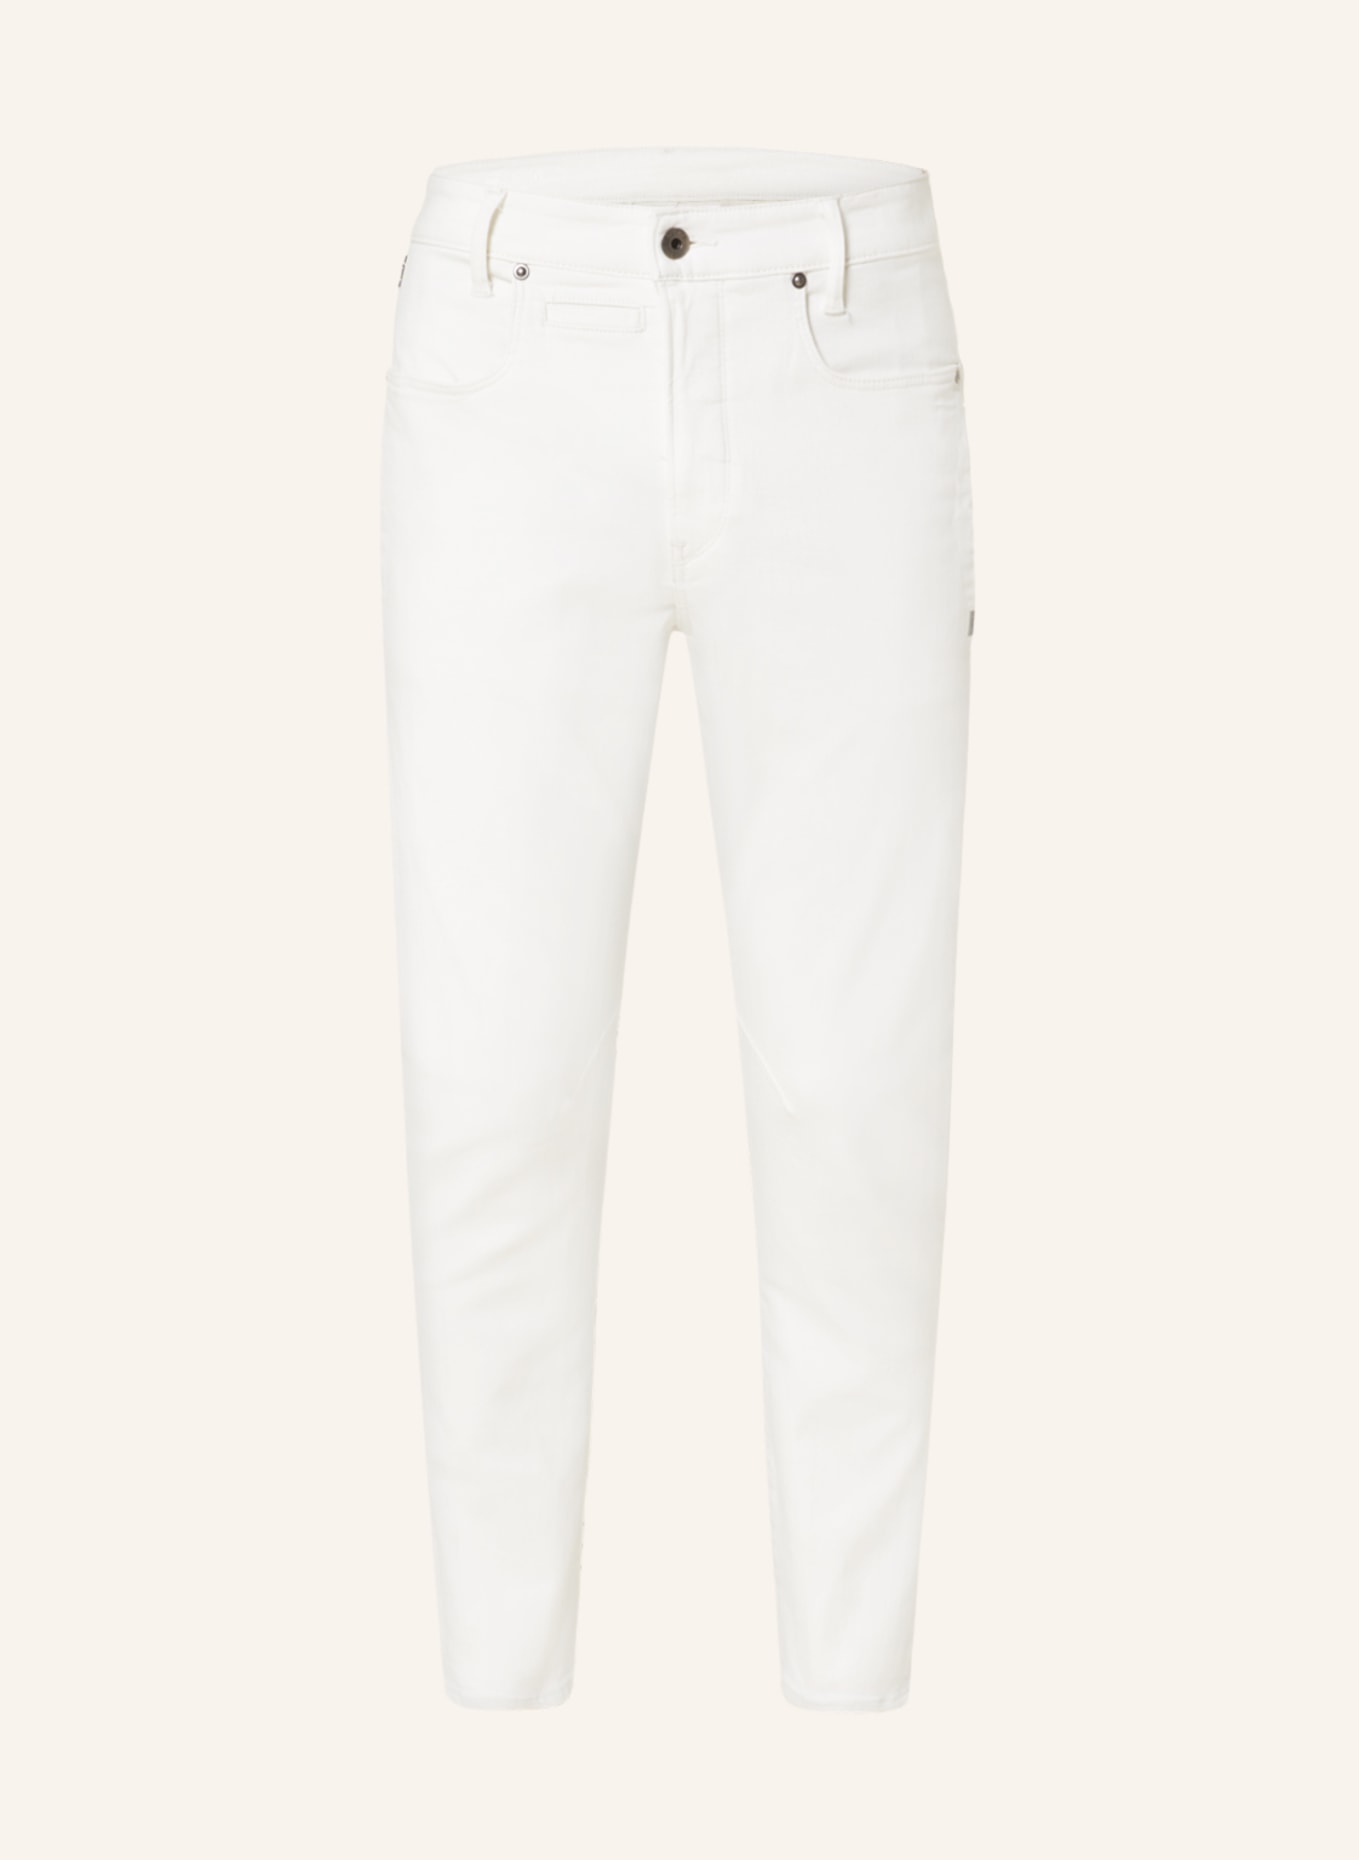 G-Star RAW Jeans D-STAQ 3D Slim Fit, Farbe: G006 white gd (Bild 1)